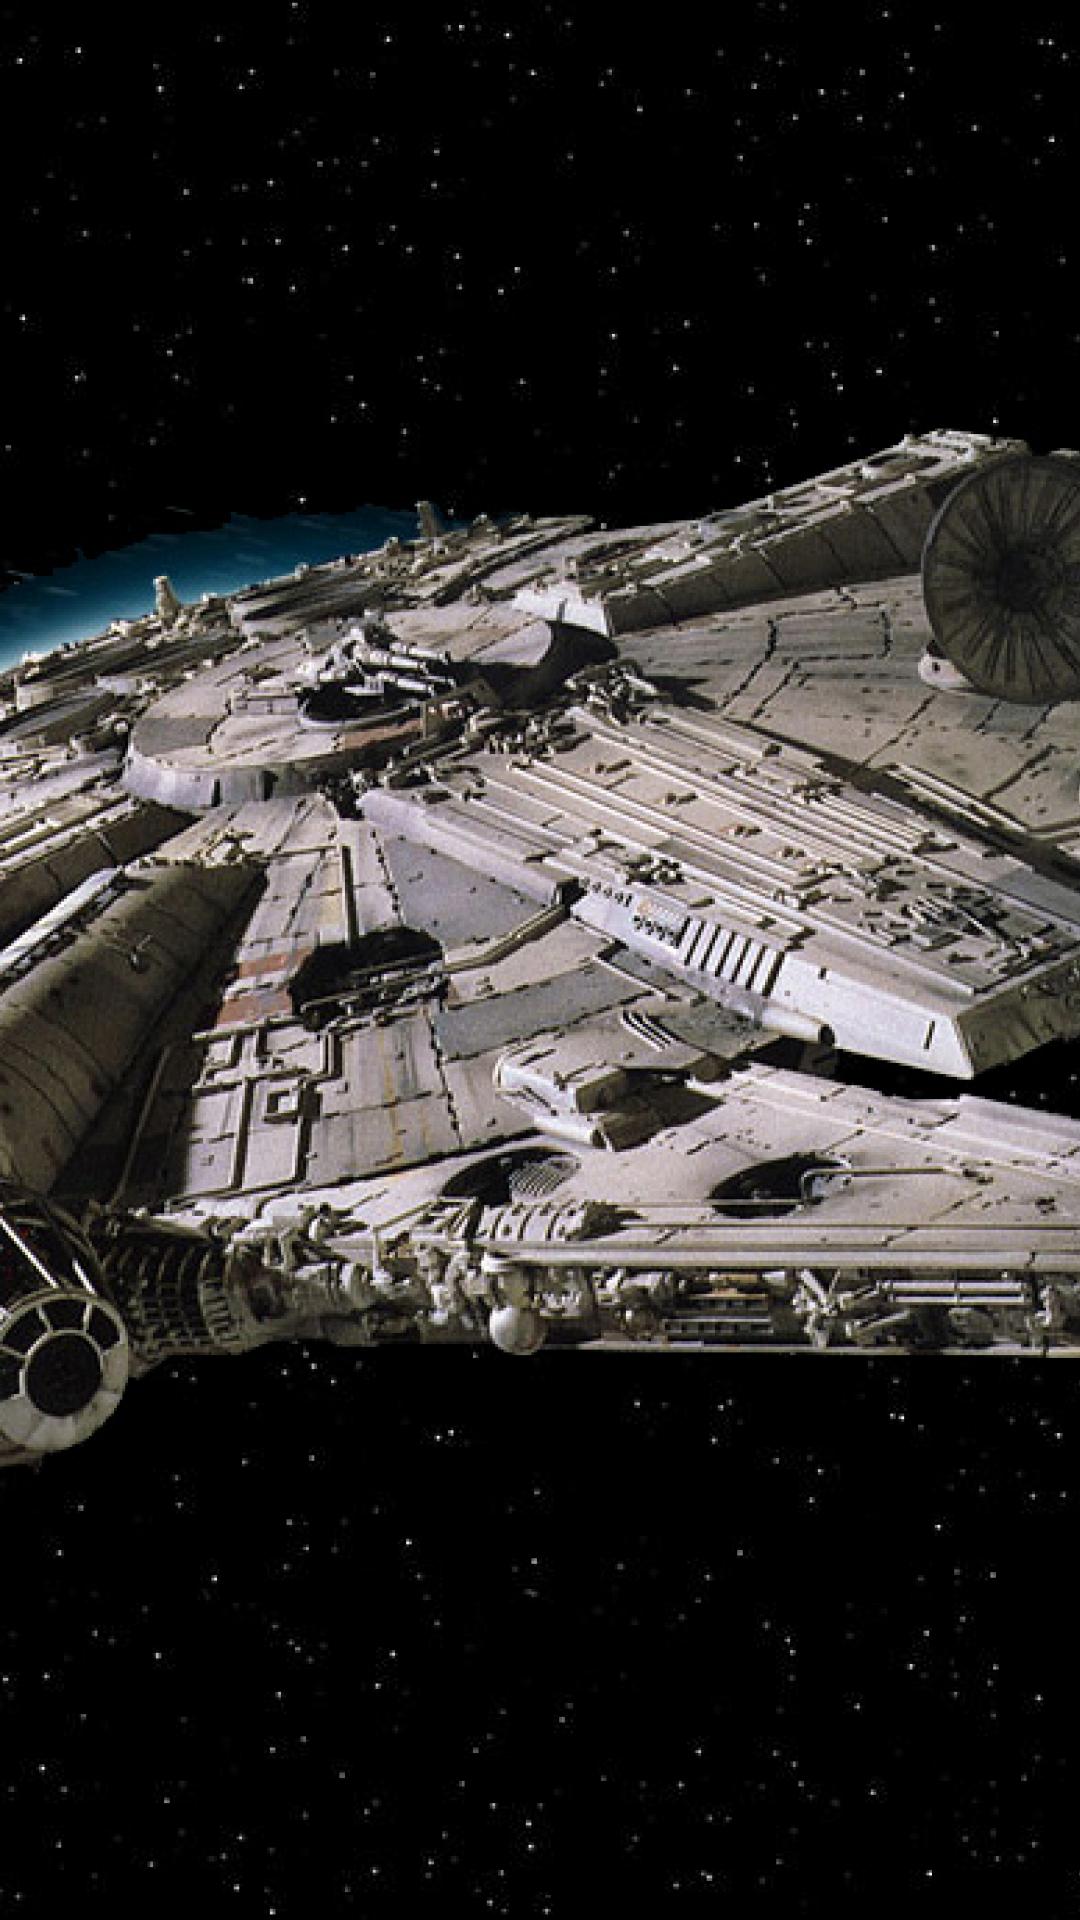 Star Wars Movies Spaceships Millenium Falcon HD Wallpaper Of